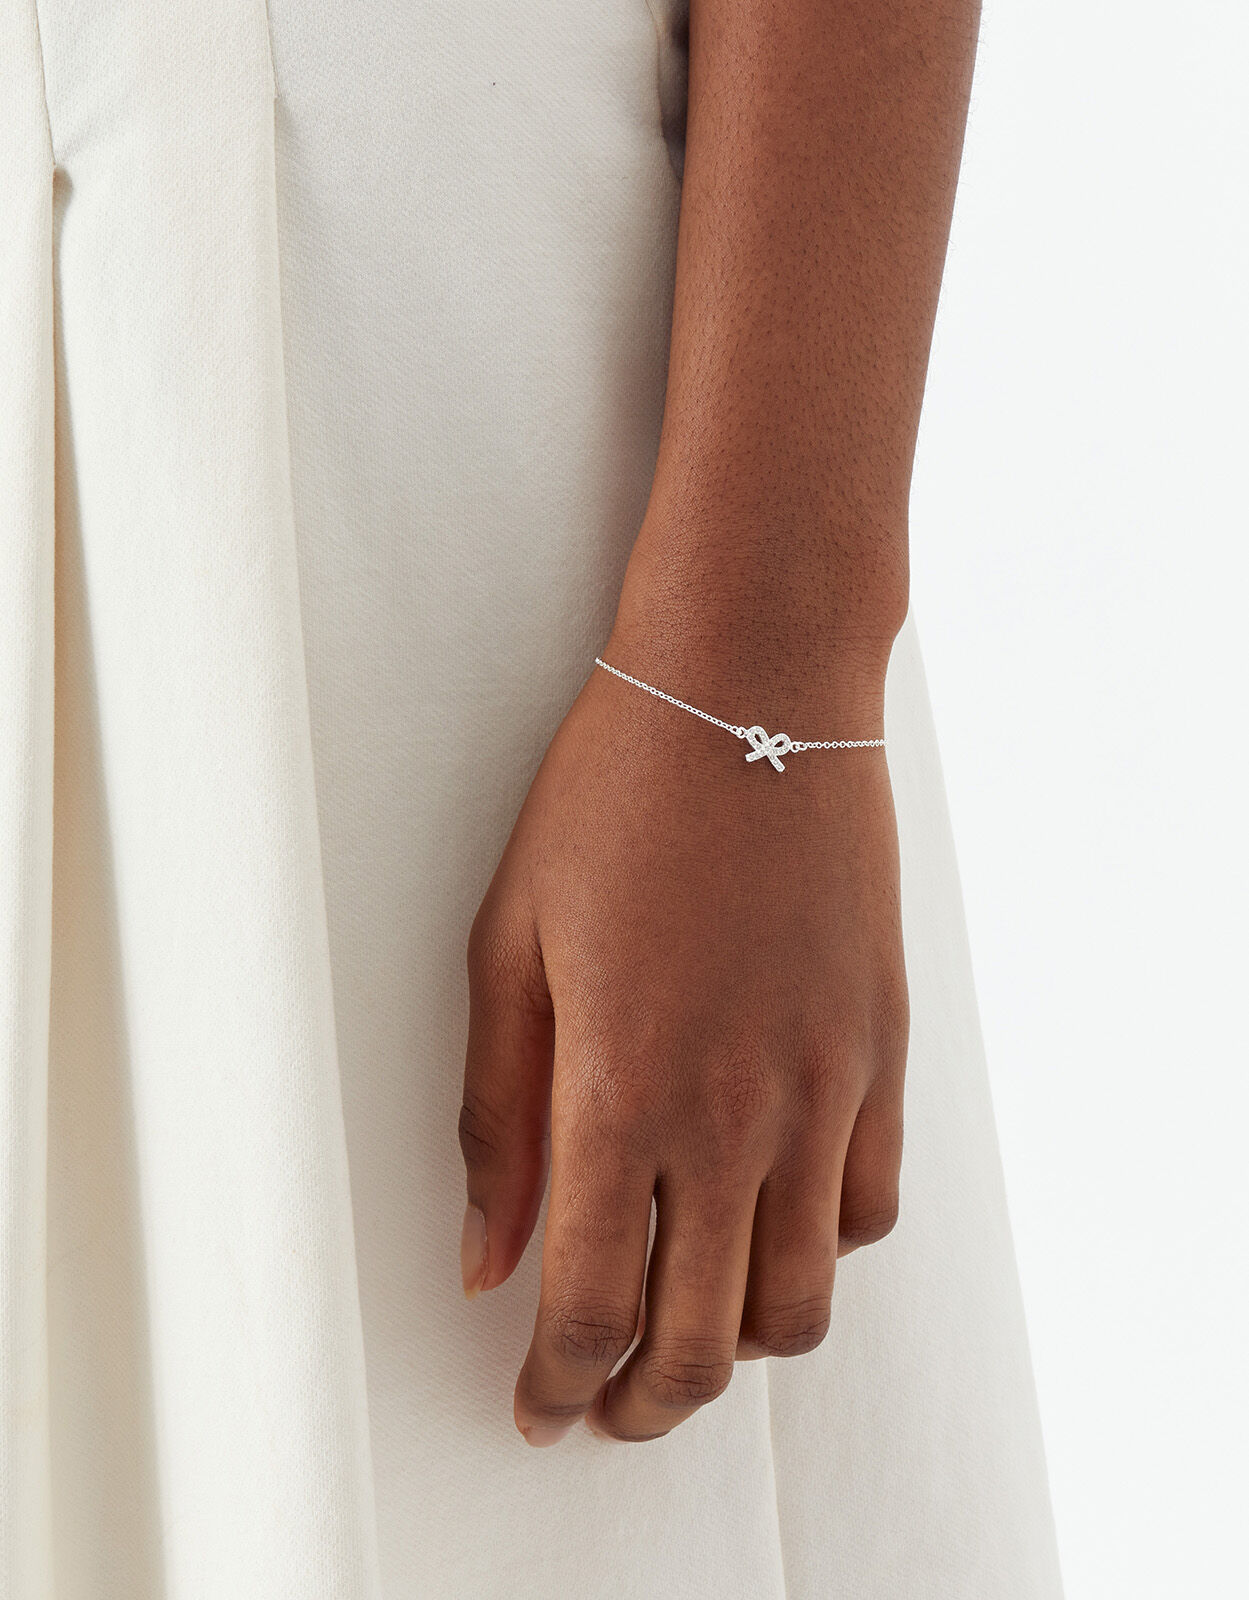 Opal glass ball 8 mm stretch bracelet snowflakes motif Jewellery Bracelets Hand Chains individual size AB370 